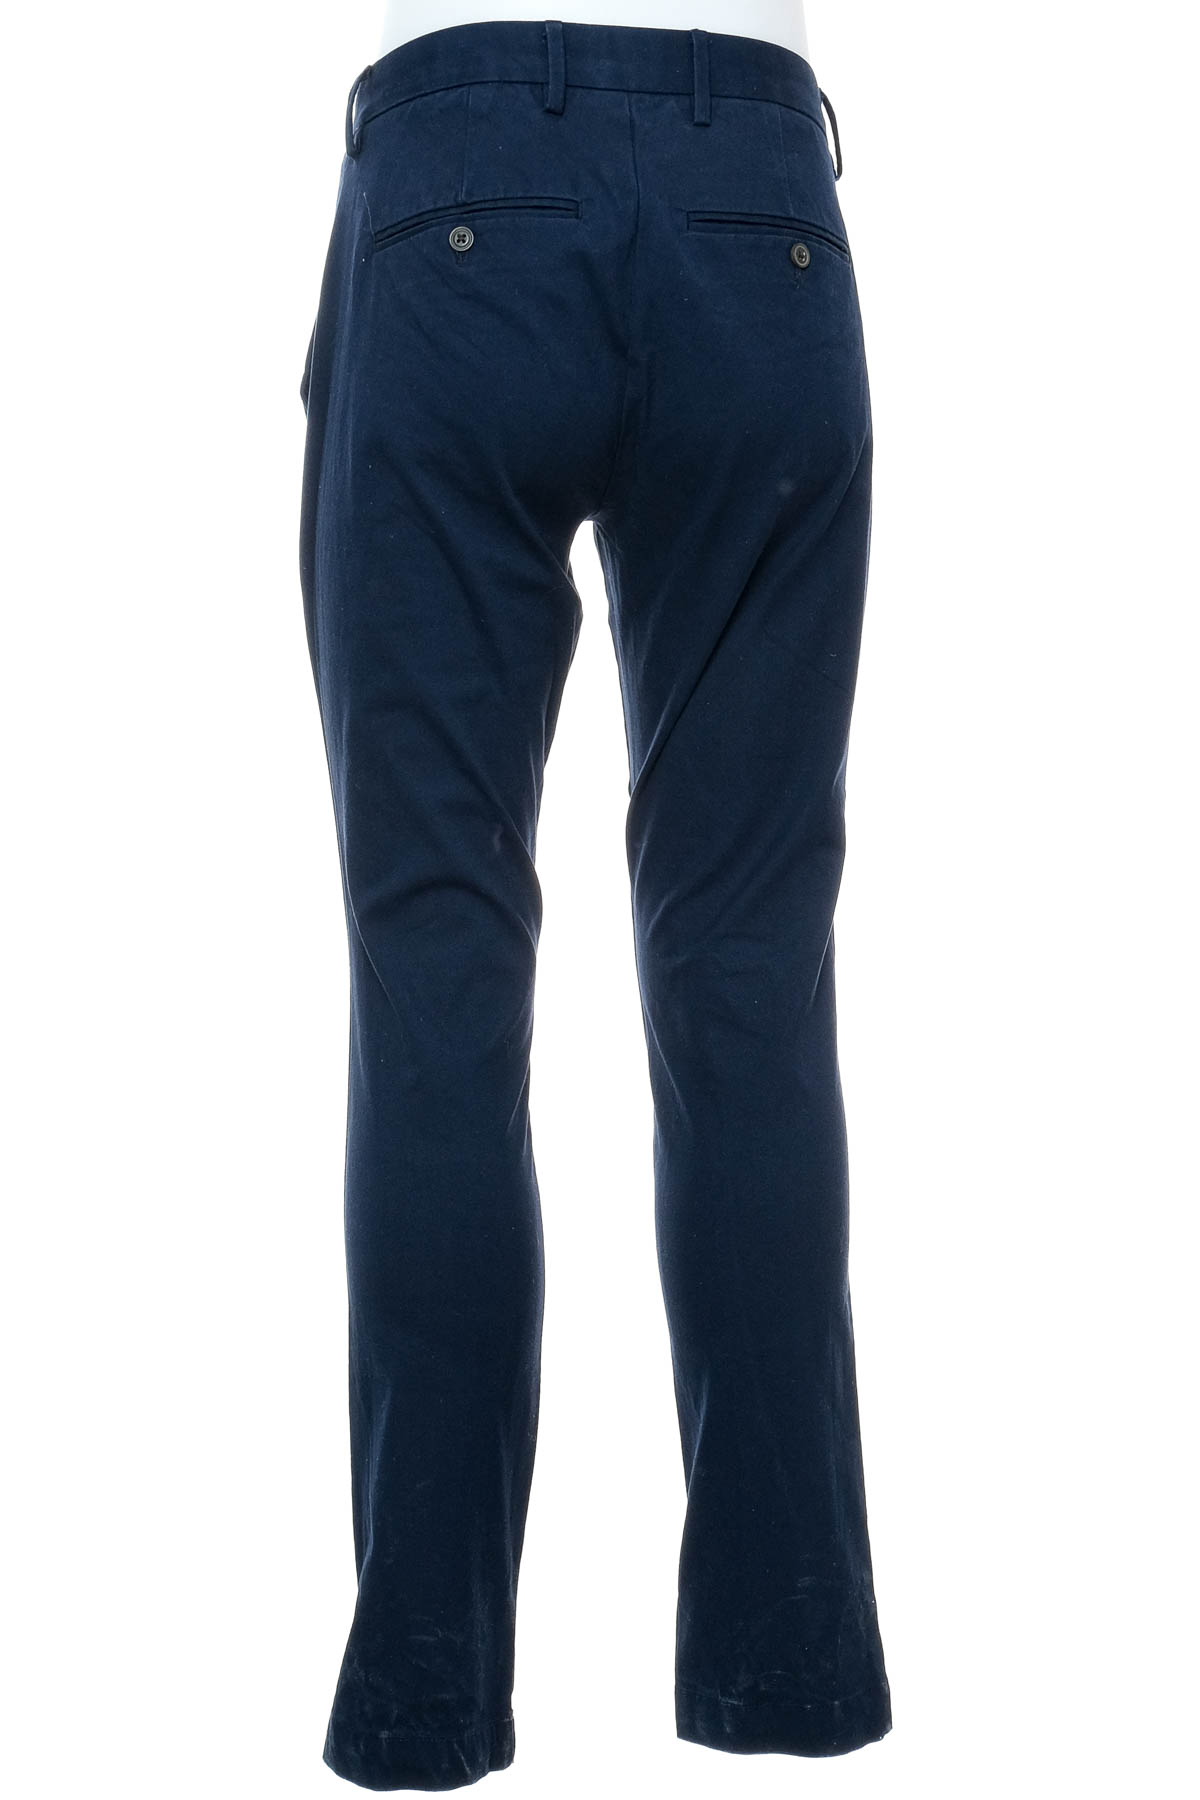 Men's trousers - GAP - 1